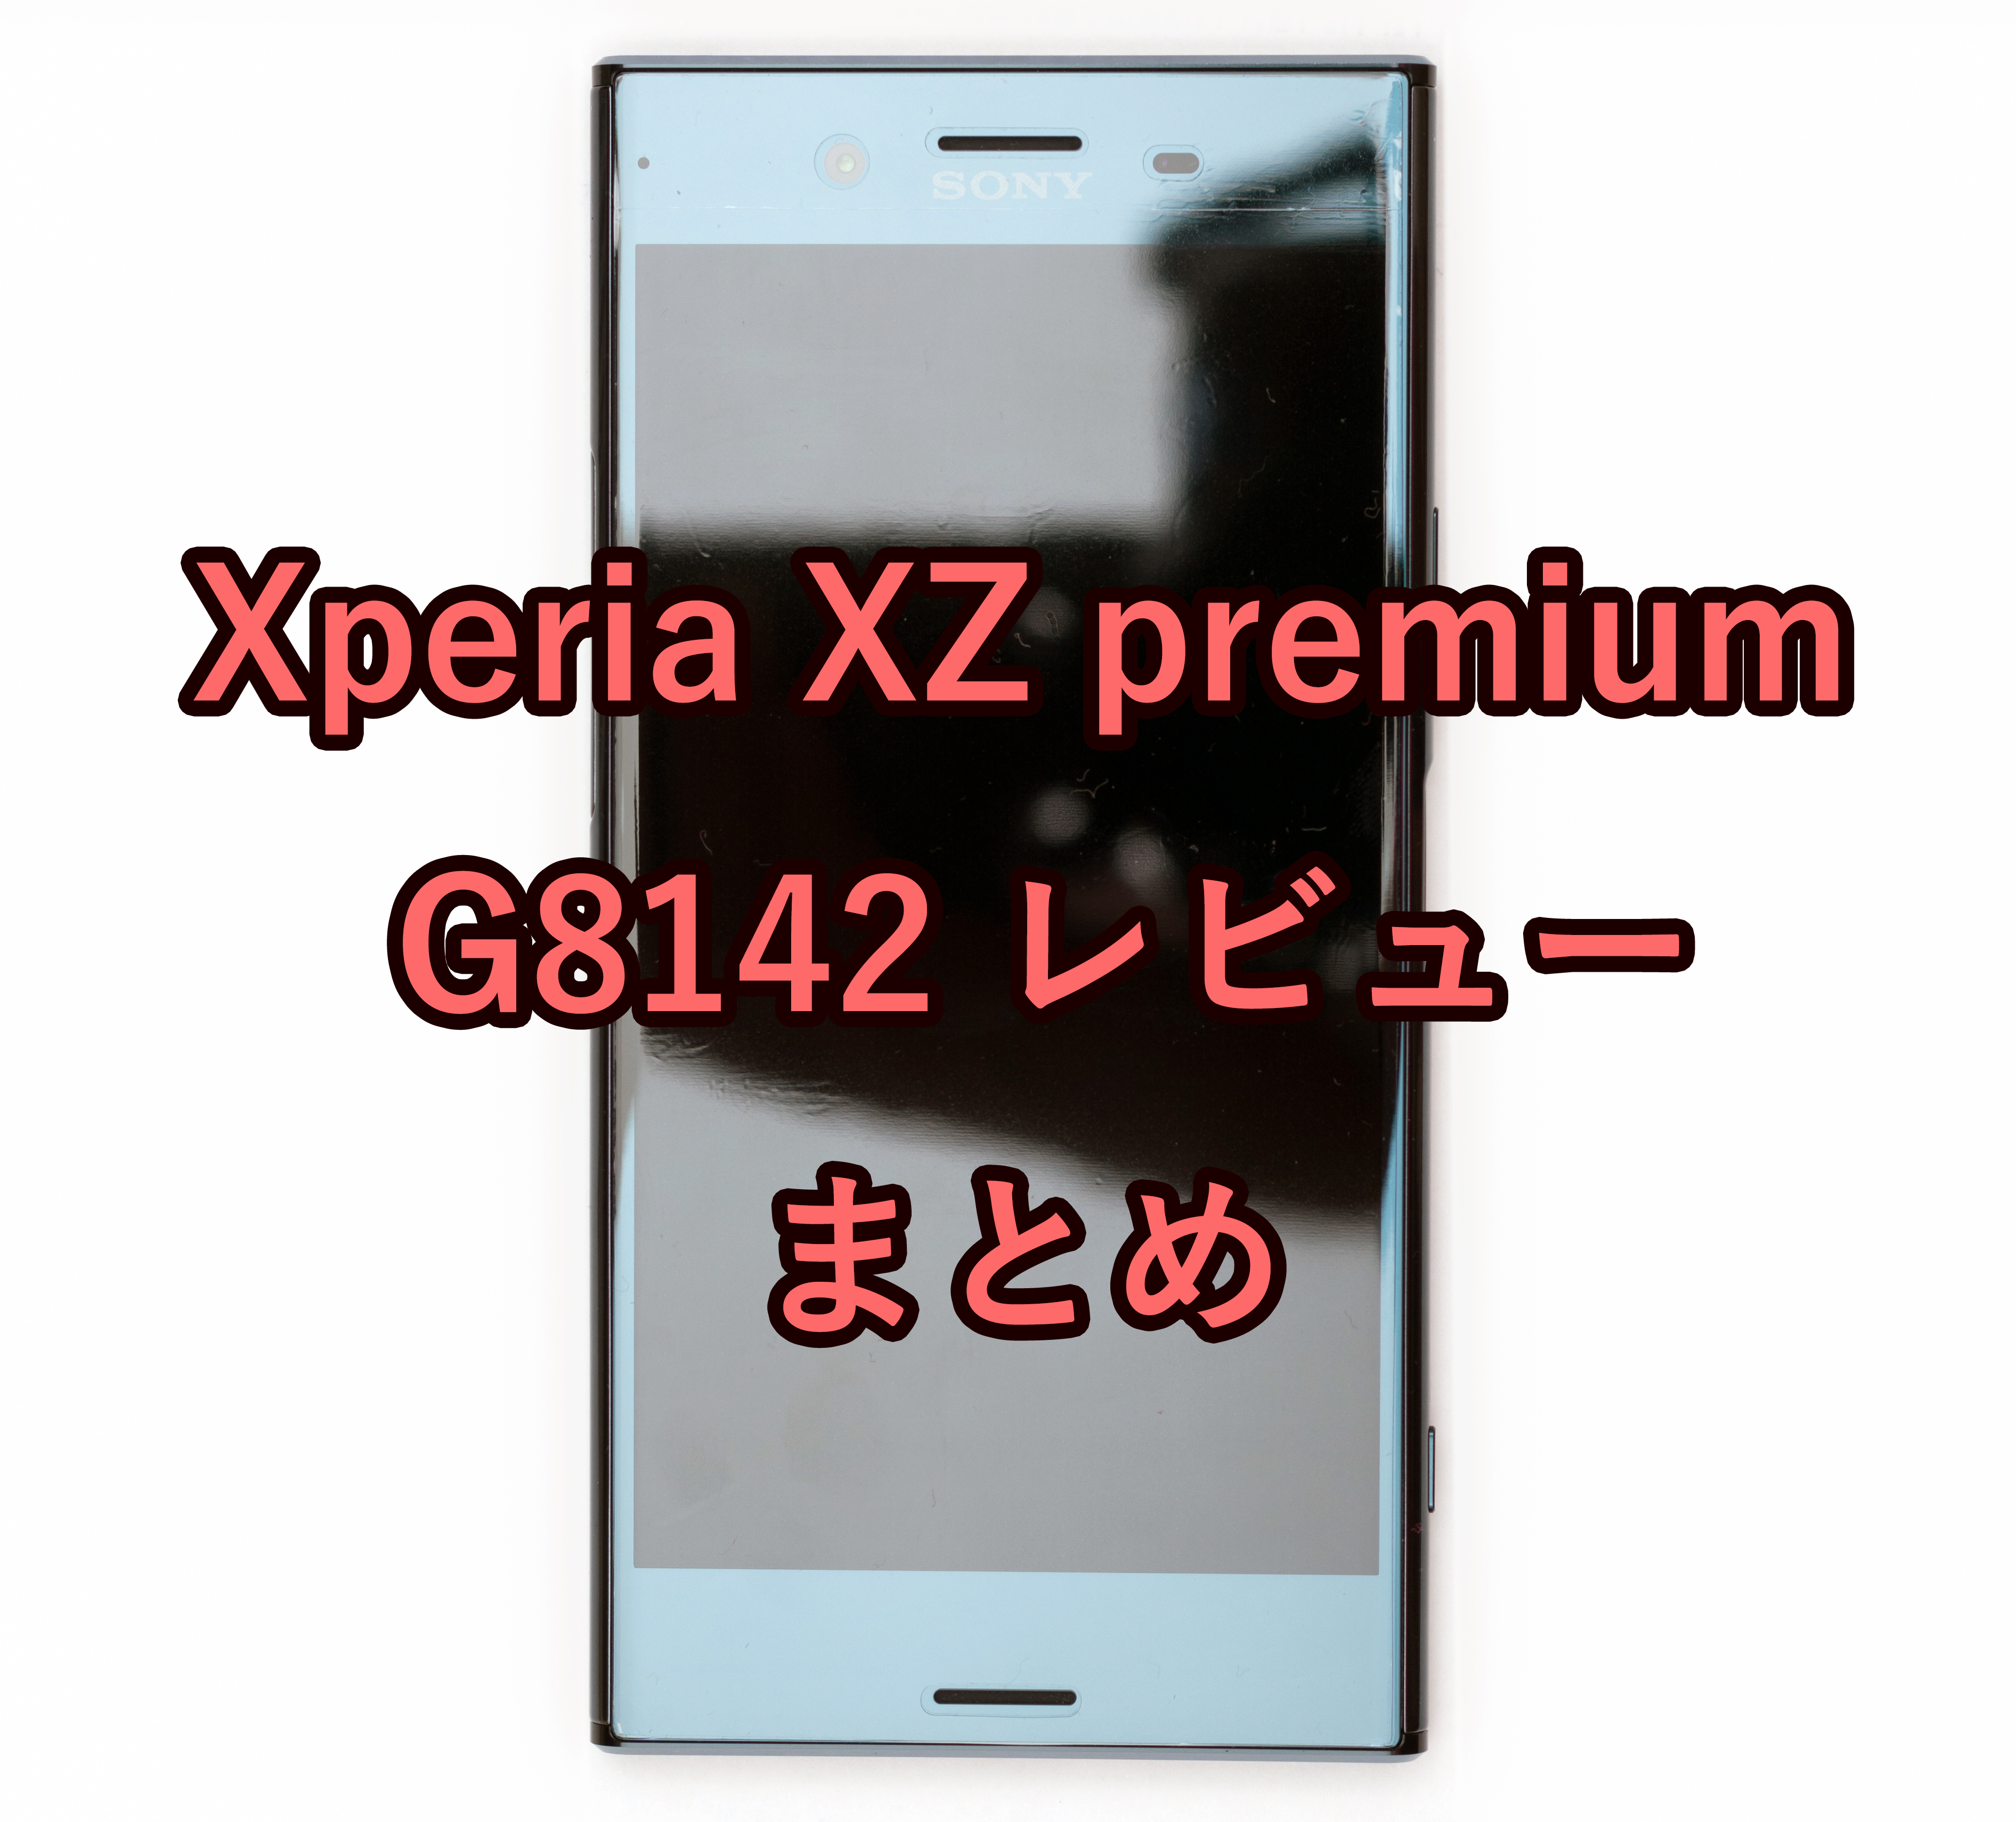 Xperia XZ premium G8142 レビュー記事まとめ